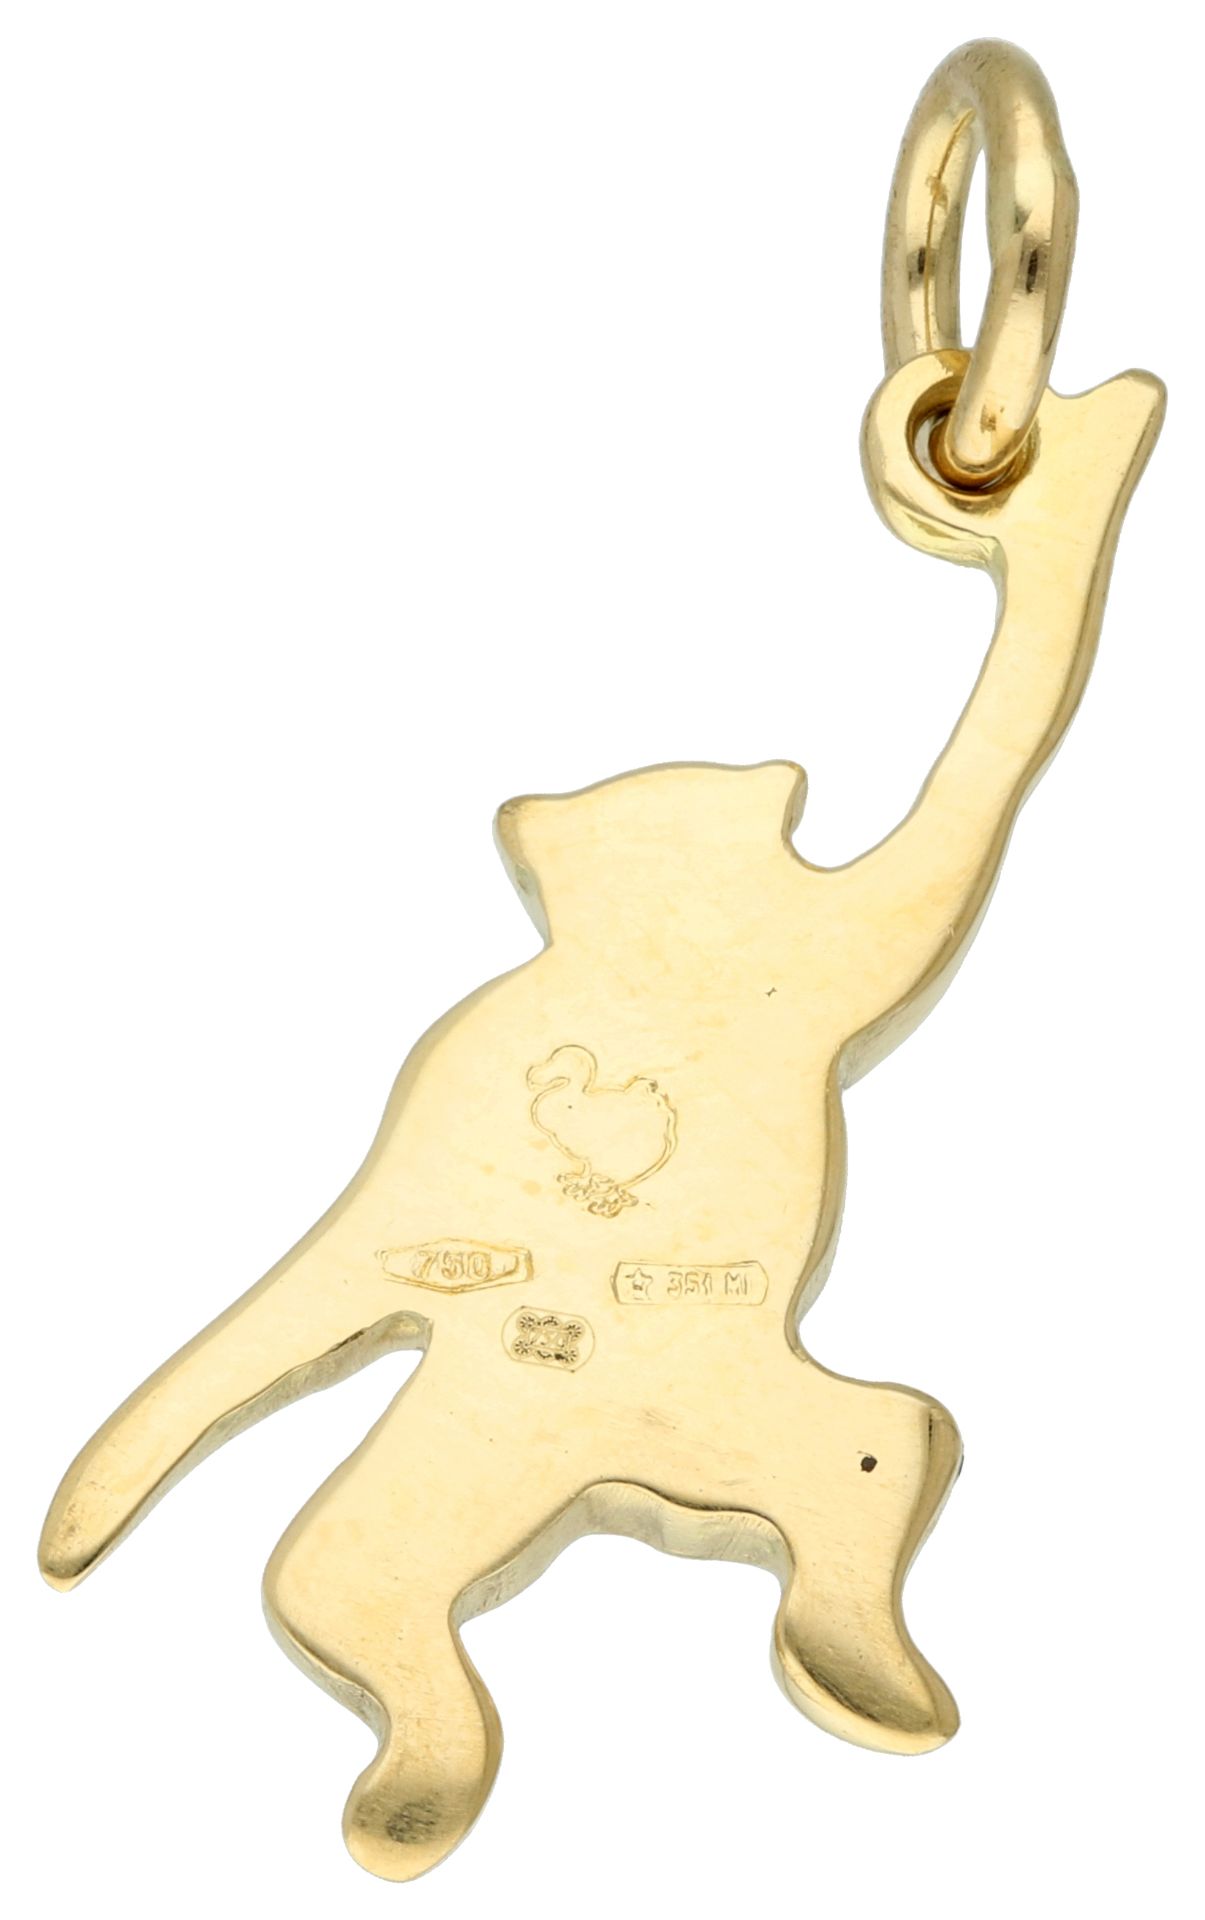 No Reserve - Pomellato 18K yellow gold DODO monkey pendant/charm. - Image 2 of 3